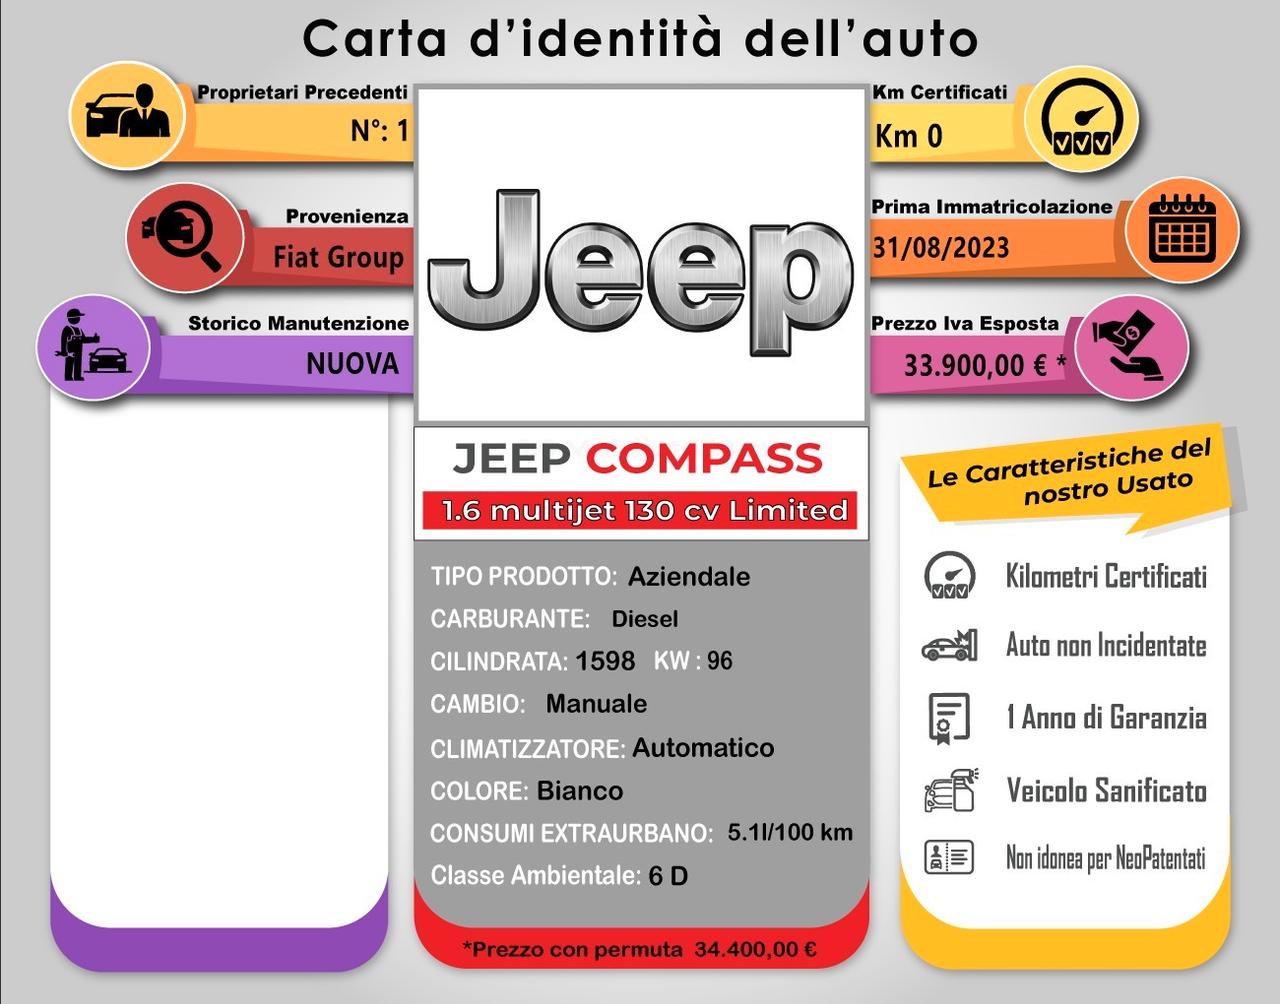 Jeep Compass 1.6 Multijet II 2WD Limited